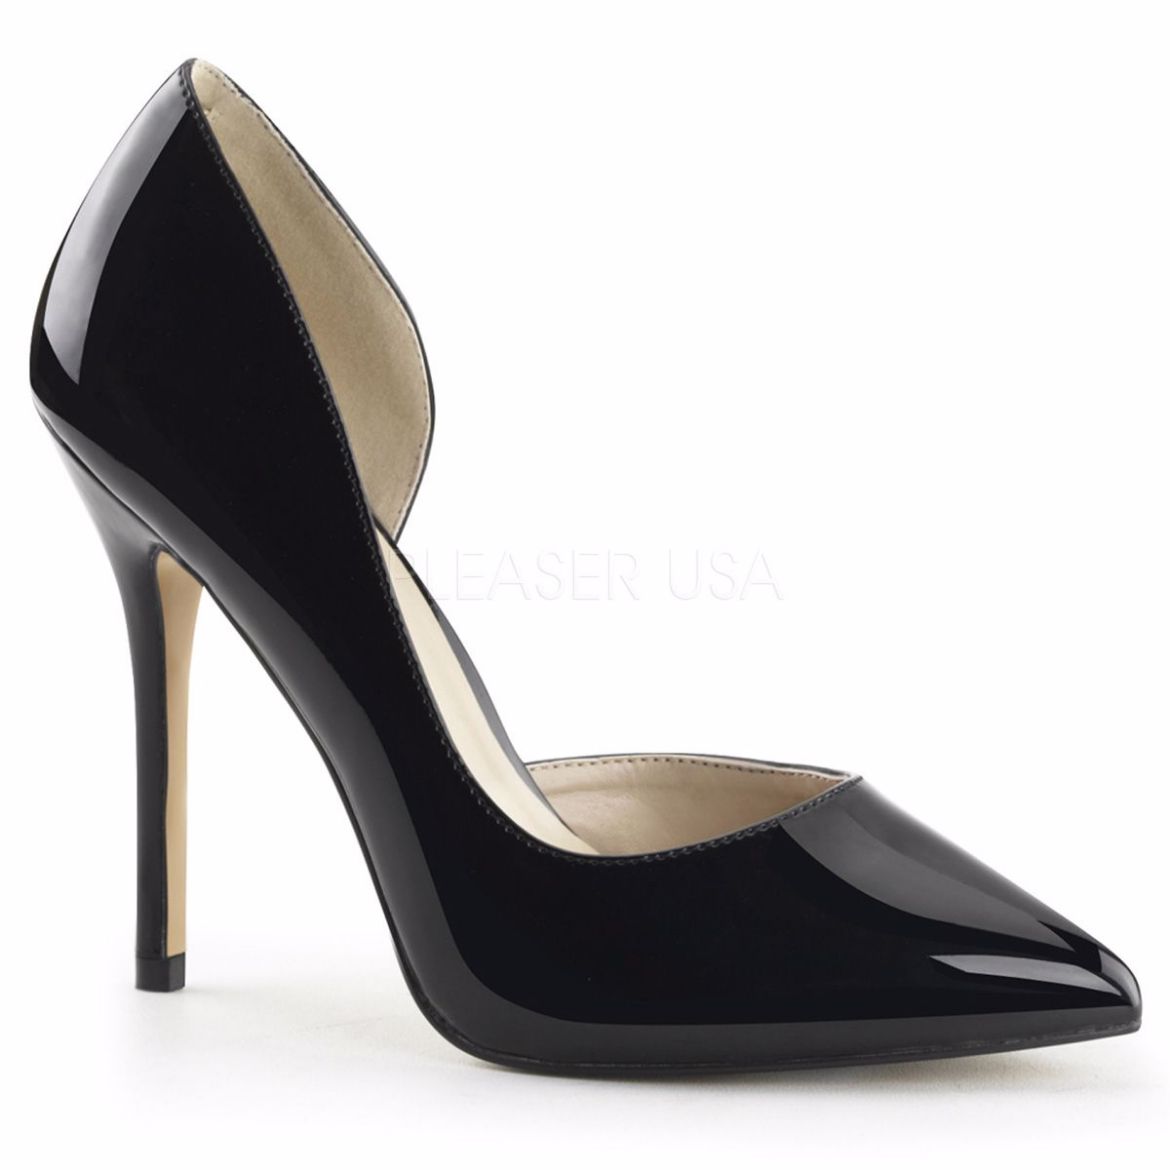 Product image of Pleaser Amuse-22 Black Patent, 5 inch (12.7 cm) Heel, 3/8 inch (1 cm) Hidden Platform Court Pump Shoes